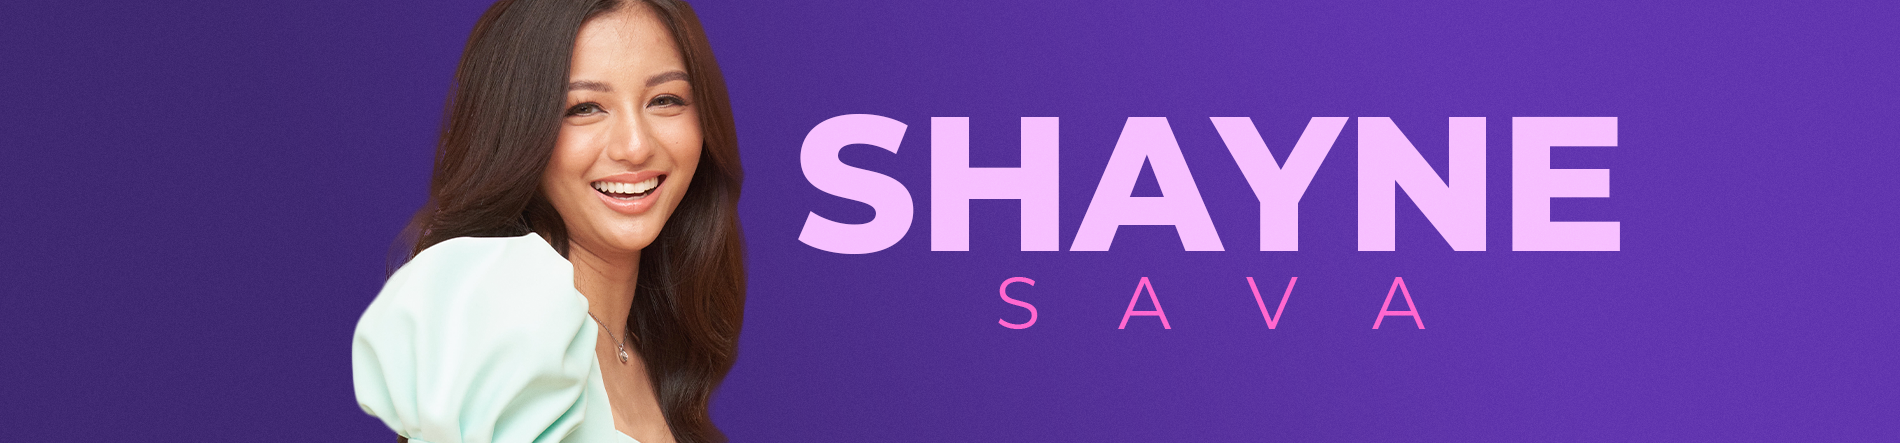 Shayne Sava Desktop Banner